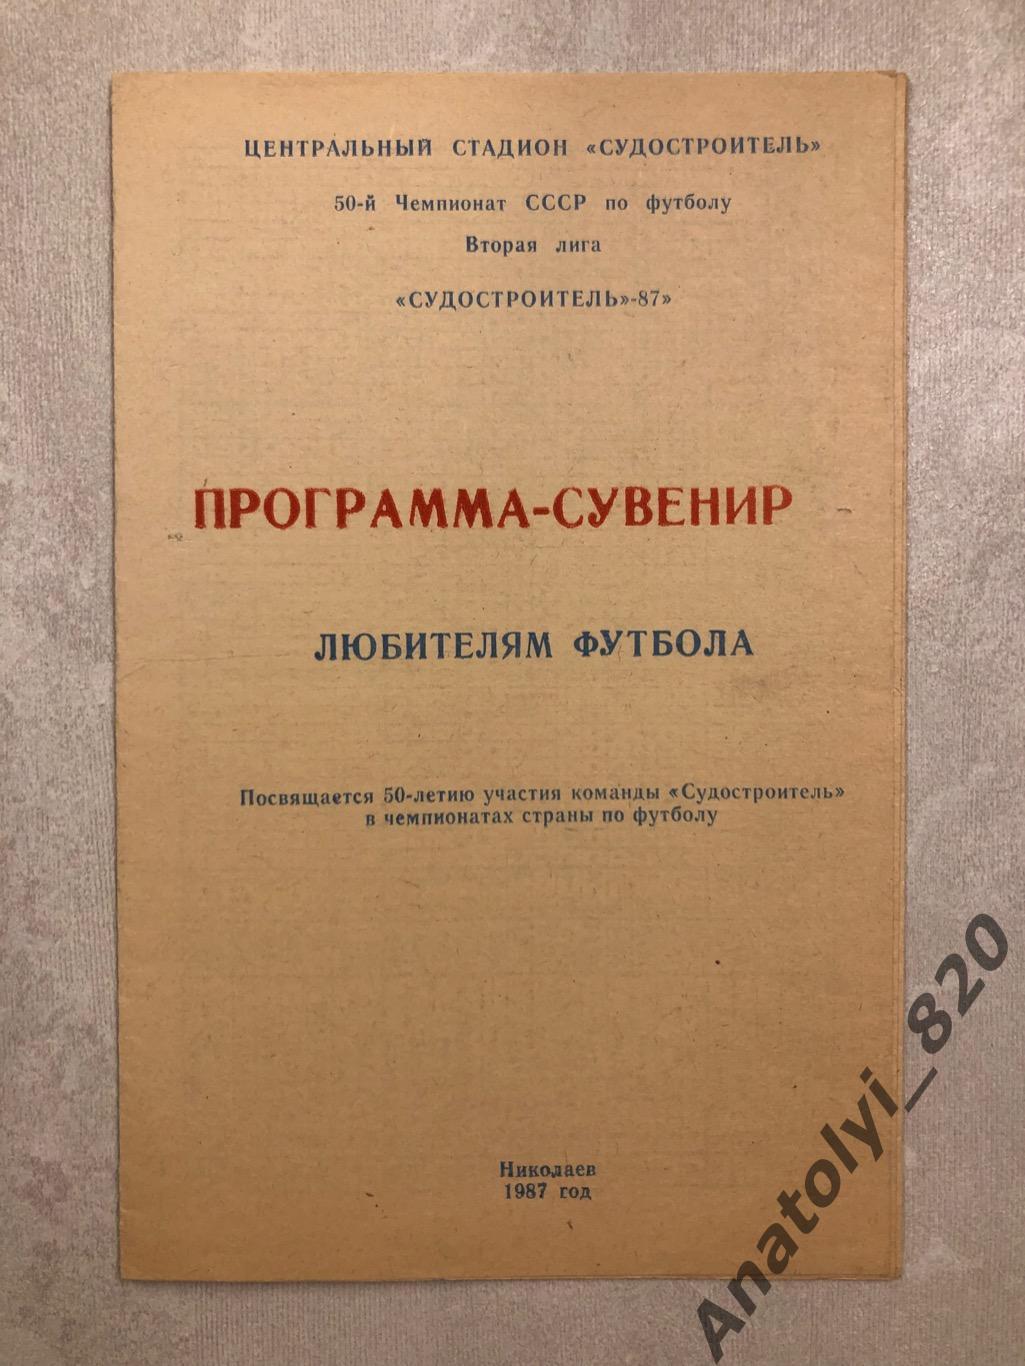 Судостроитель Николаев, программа сувенир 1987 год